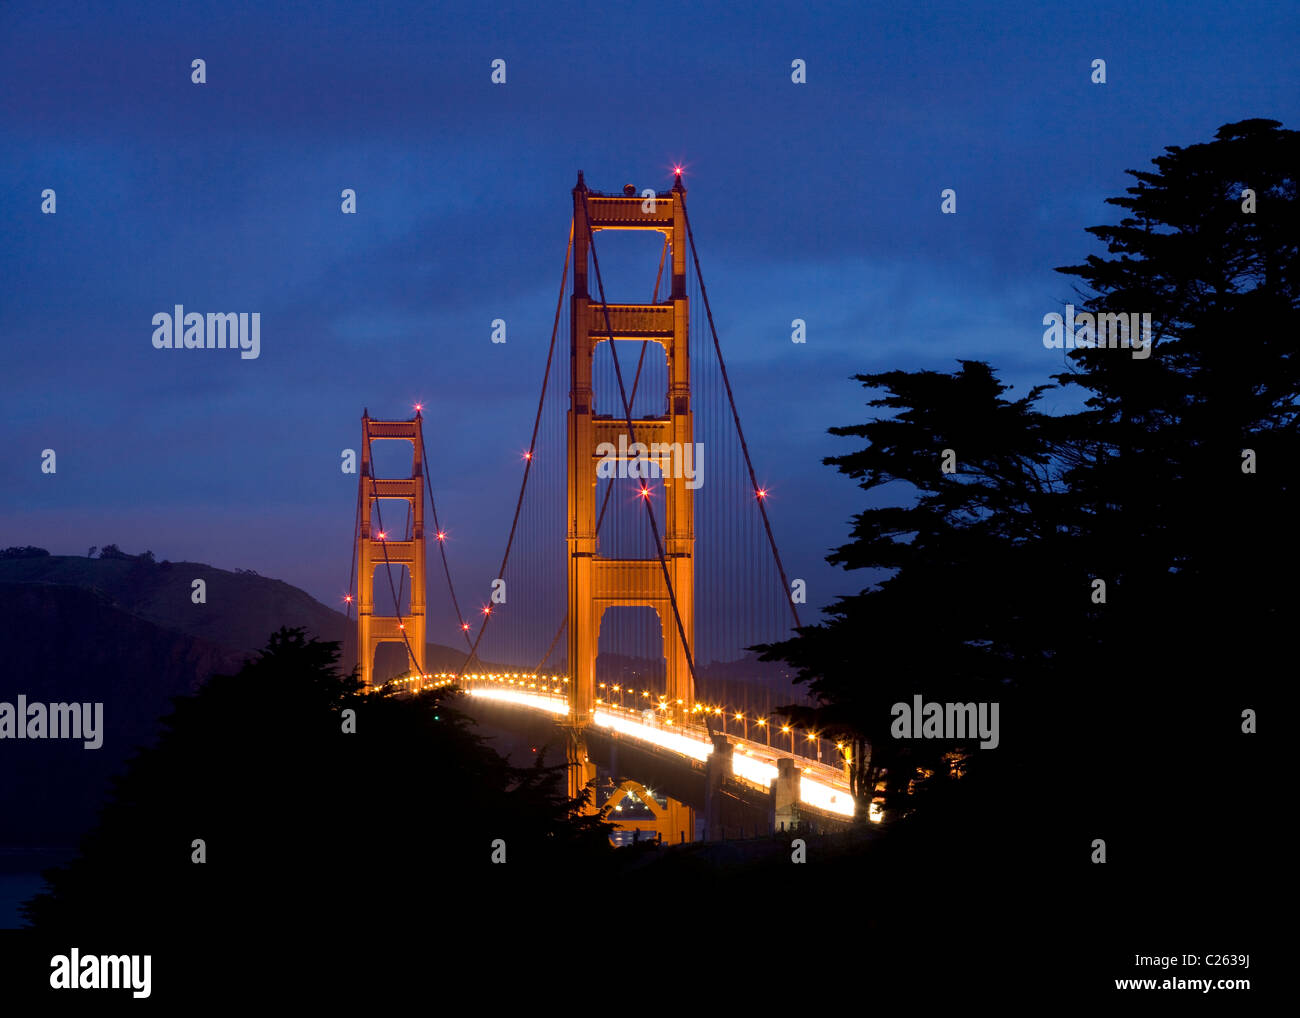 Le Golden Gate Bridge at night - San Francisco, California USA Banque D'Images